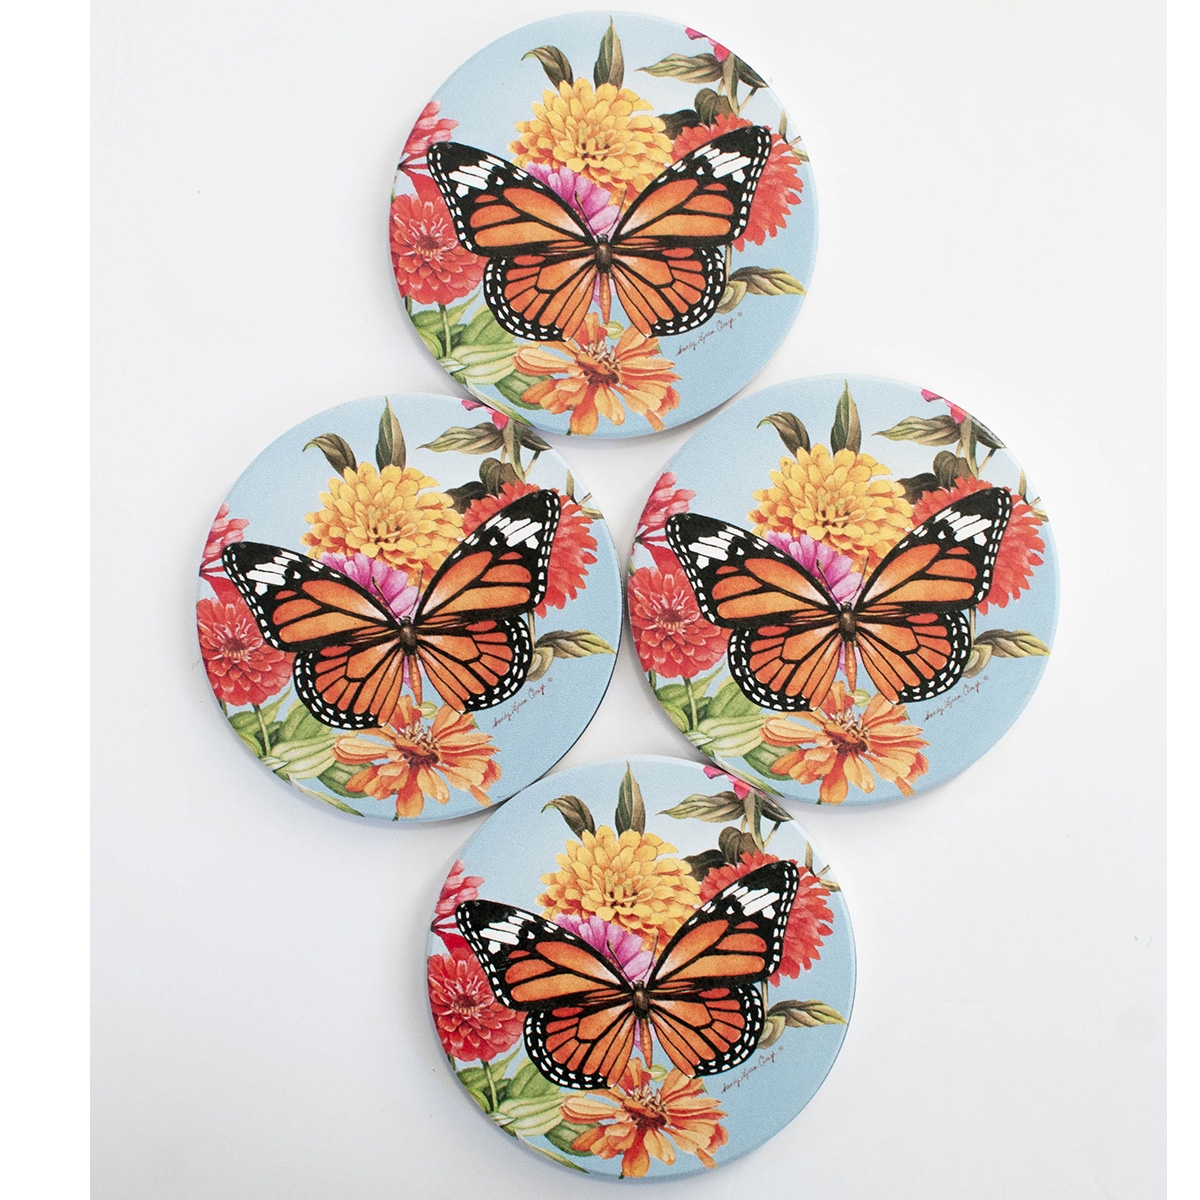 Beautiful Monarchs Coasters